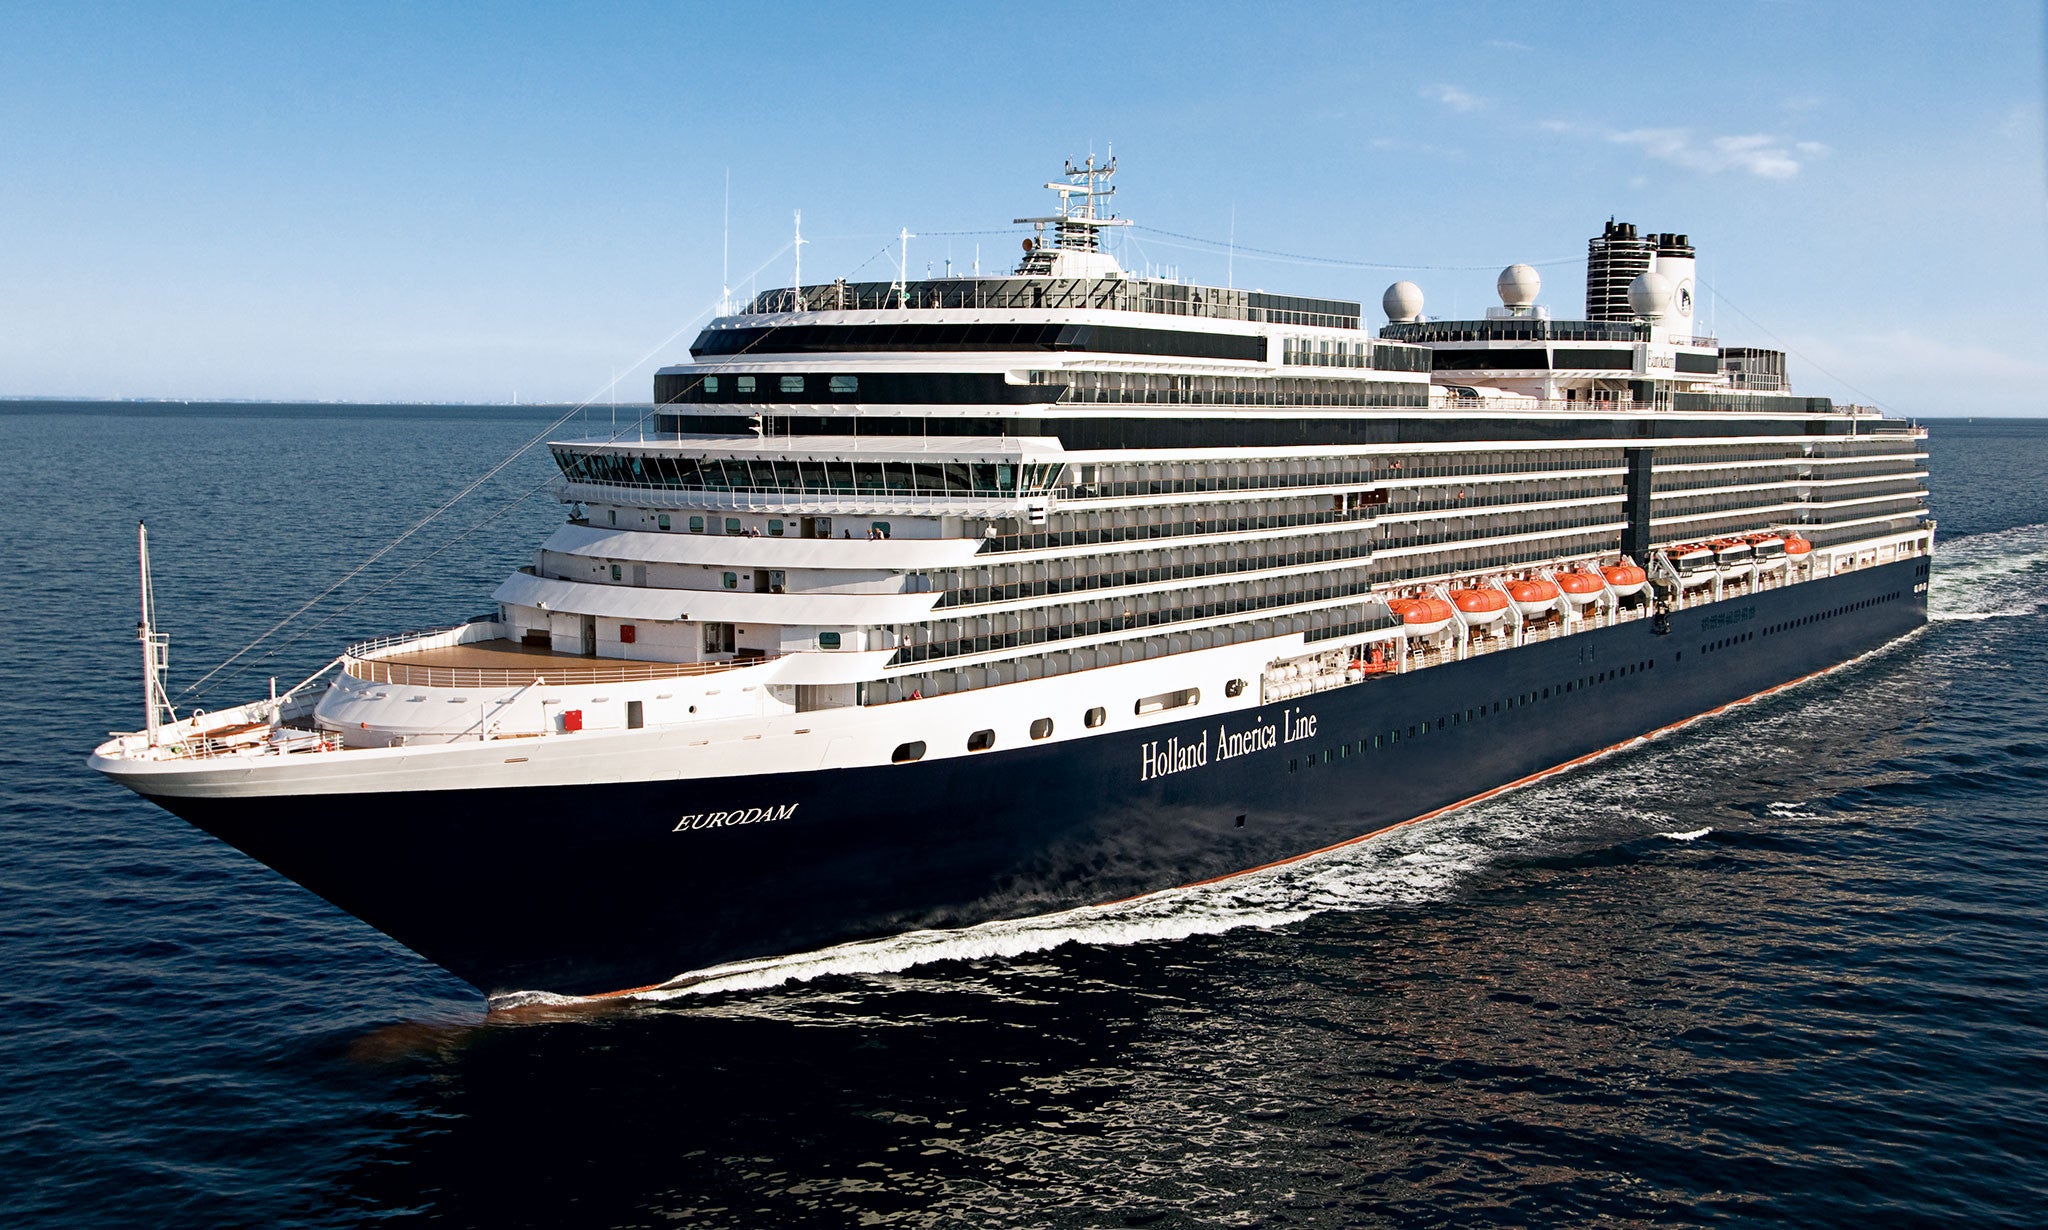 The Holland America cruise ship Eurodam